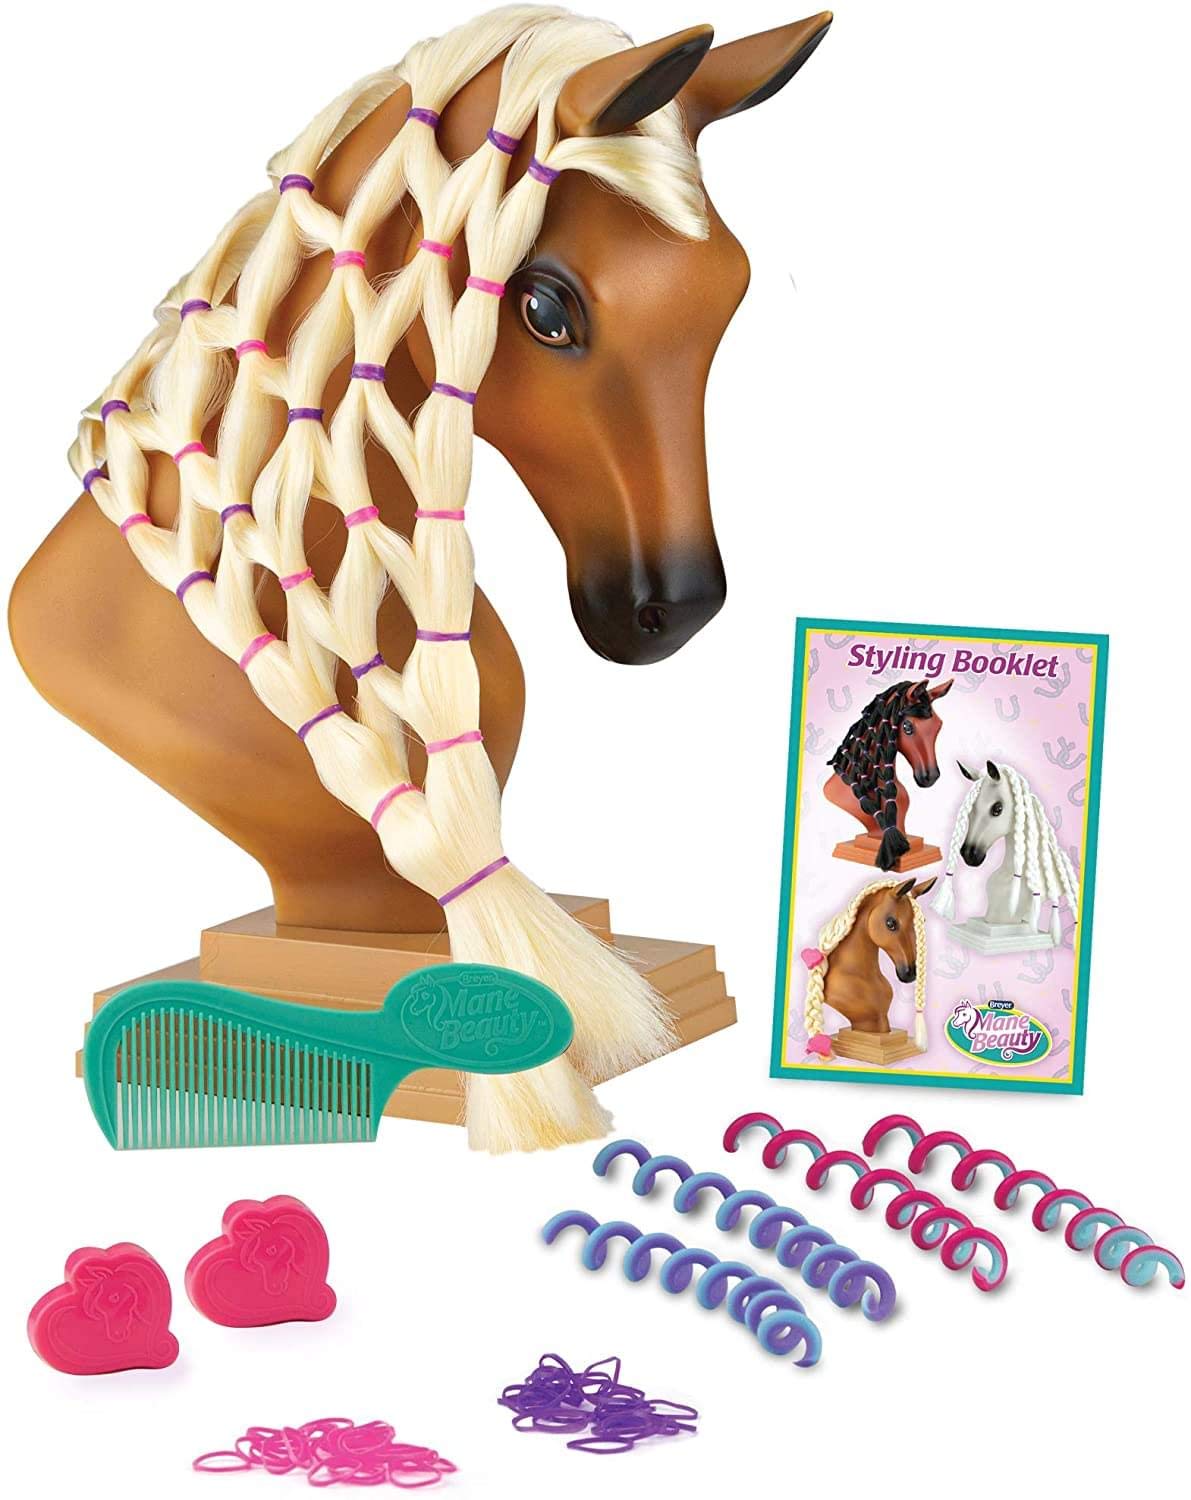 Breyer Horses Mane Beauty Horse Styling Head | SUNSET | Blonde Extra-Long Silky No Tangle Mane | 10